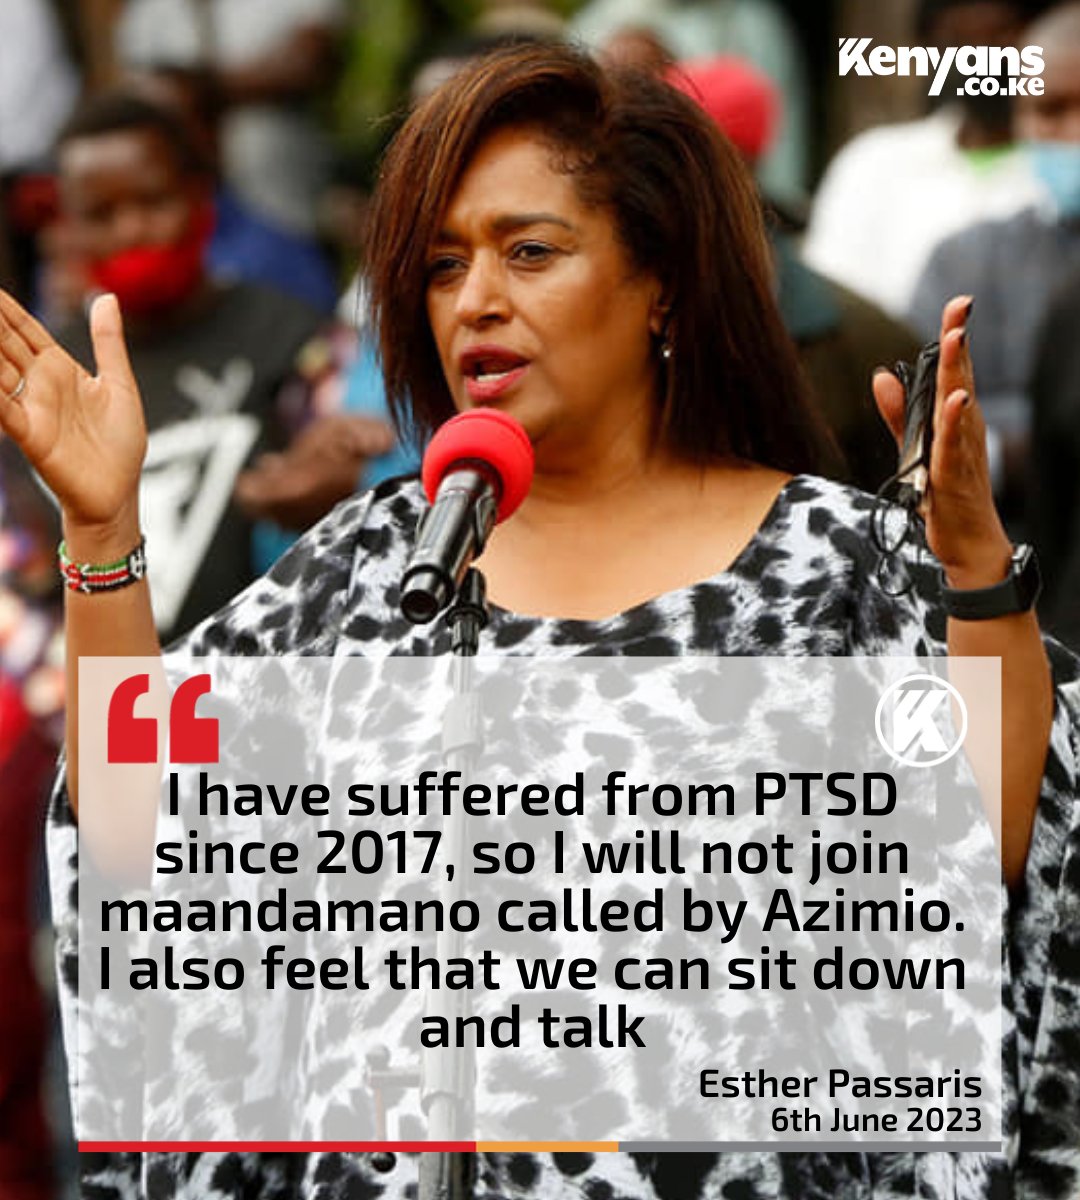 Esther Passaris says why she will not be joining Azimio's maandamano